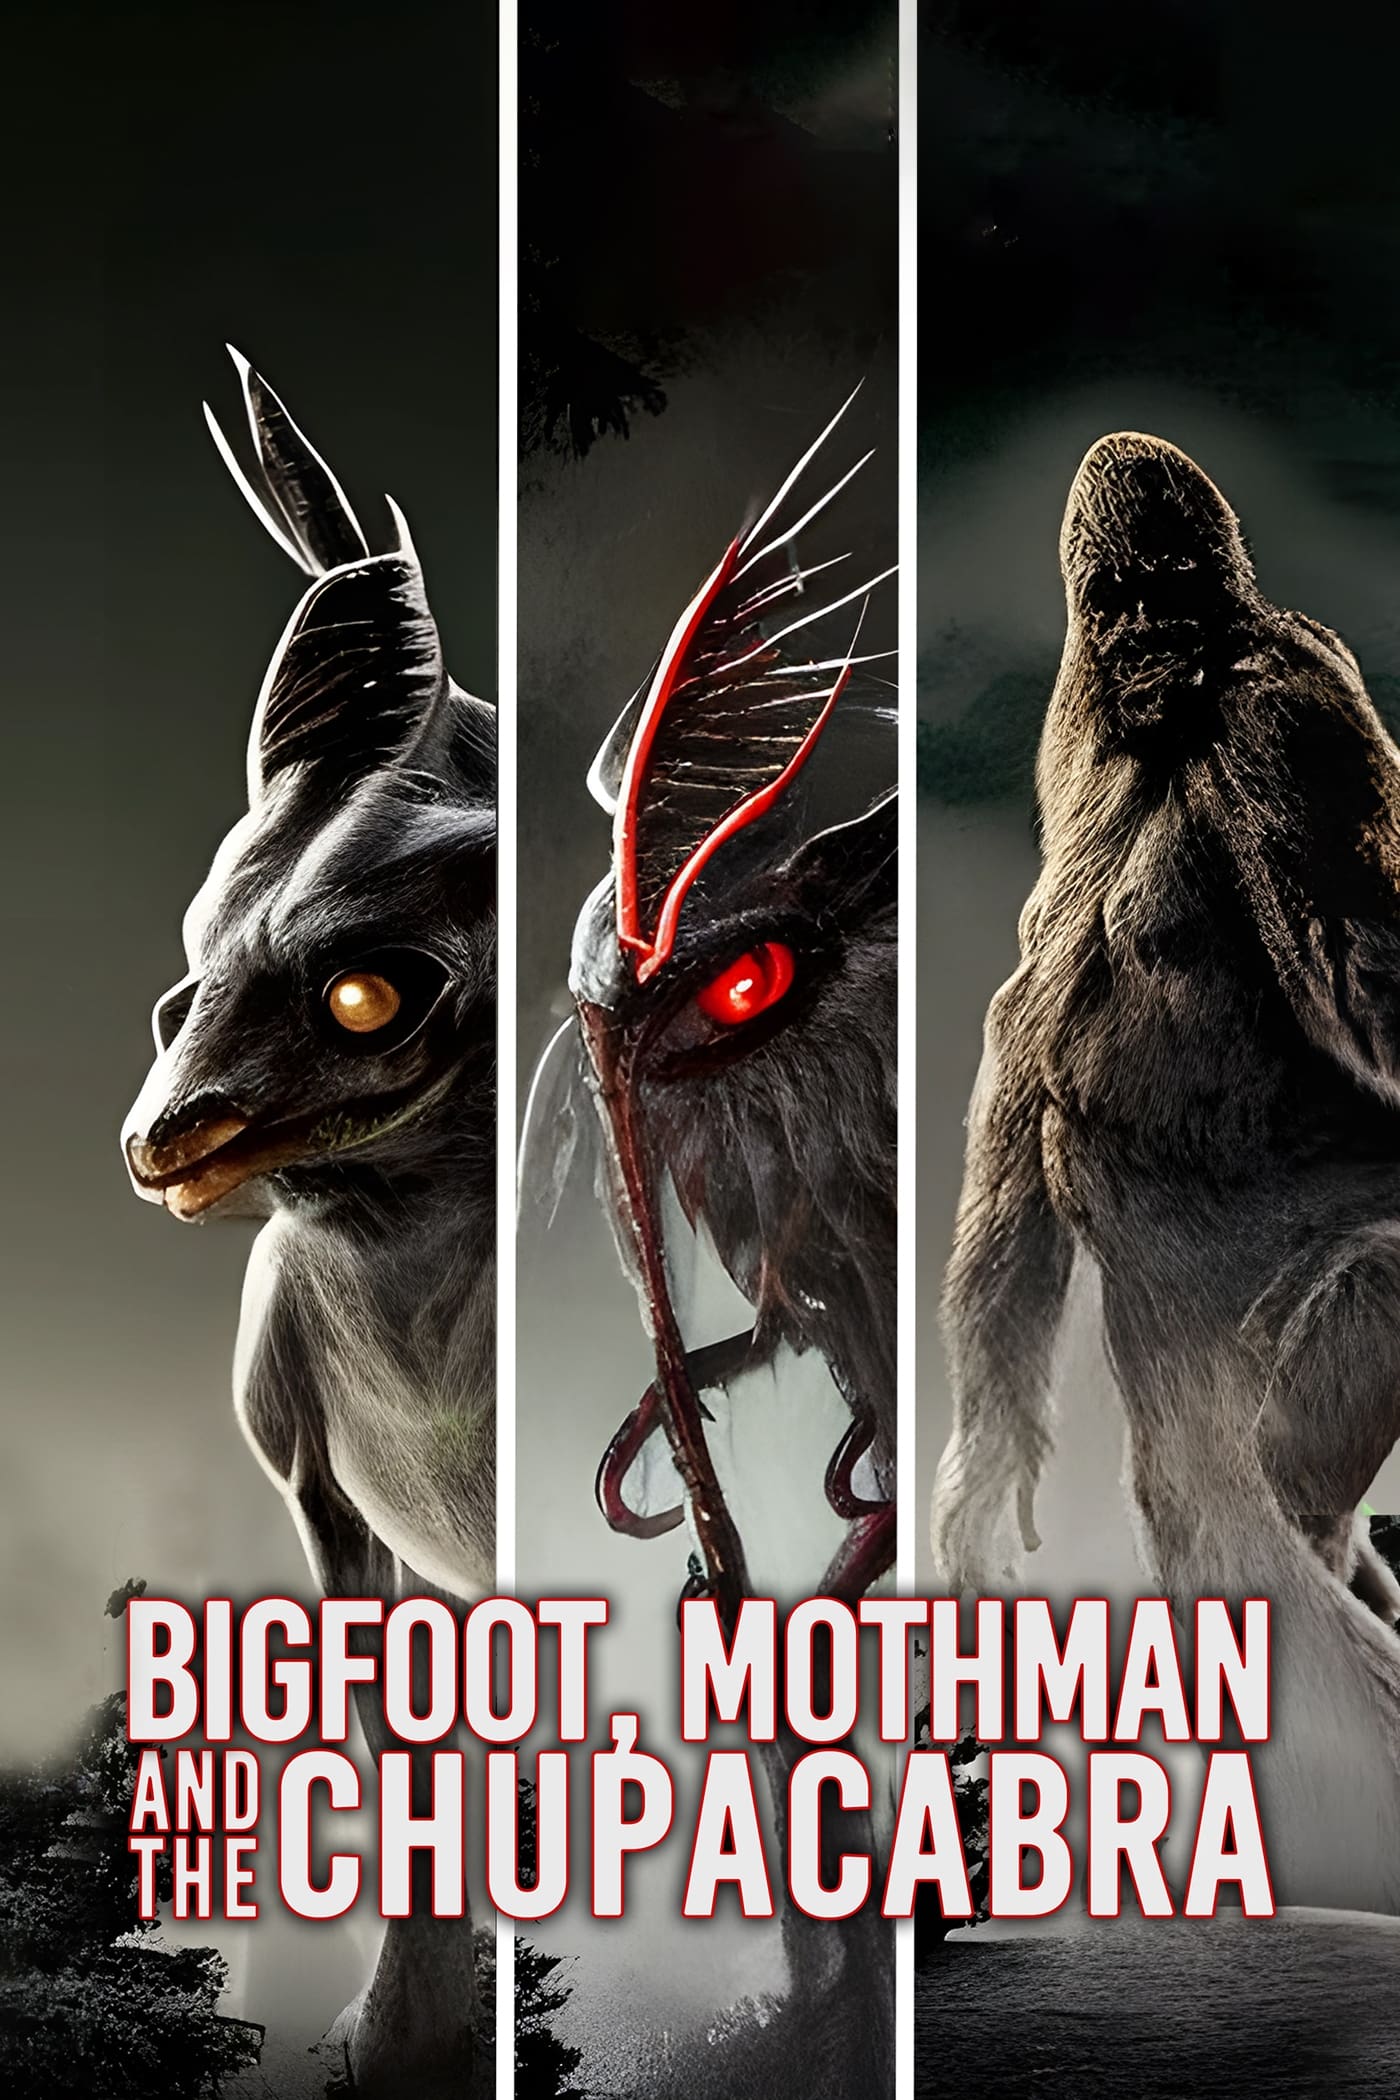 Bigfoot, Mothman and the Chupacabra